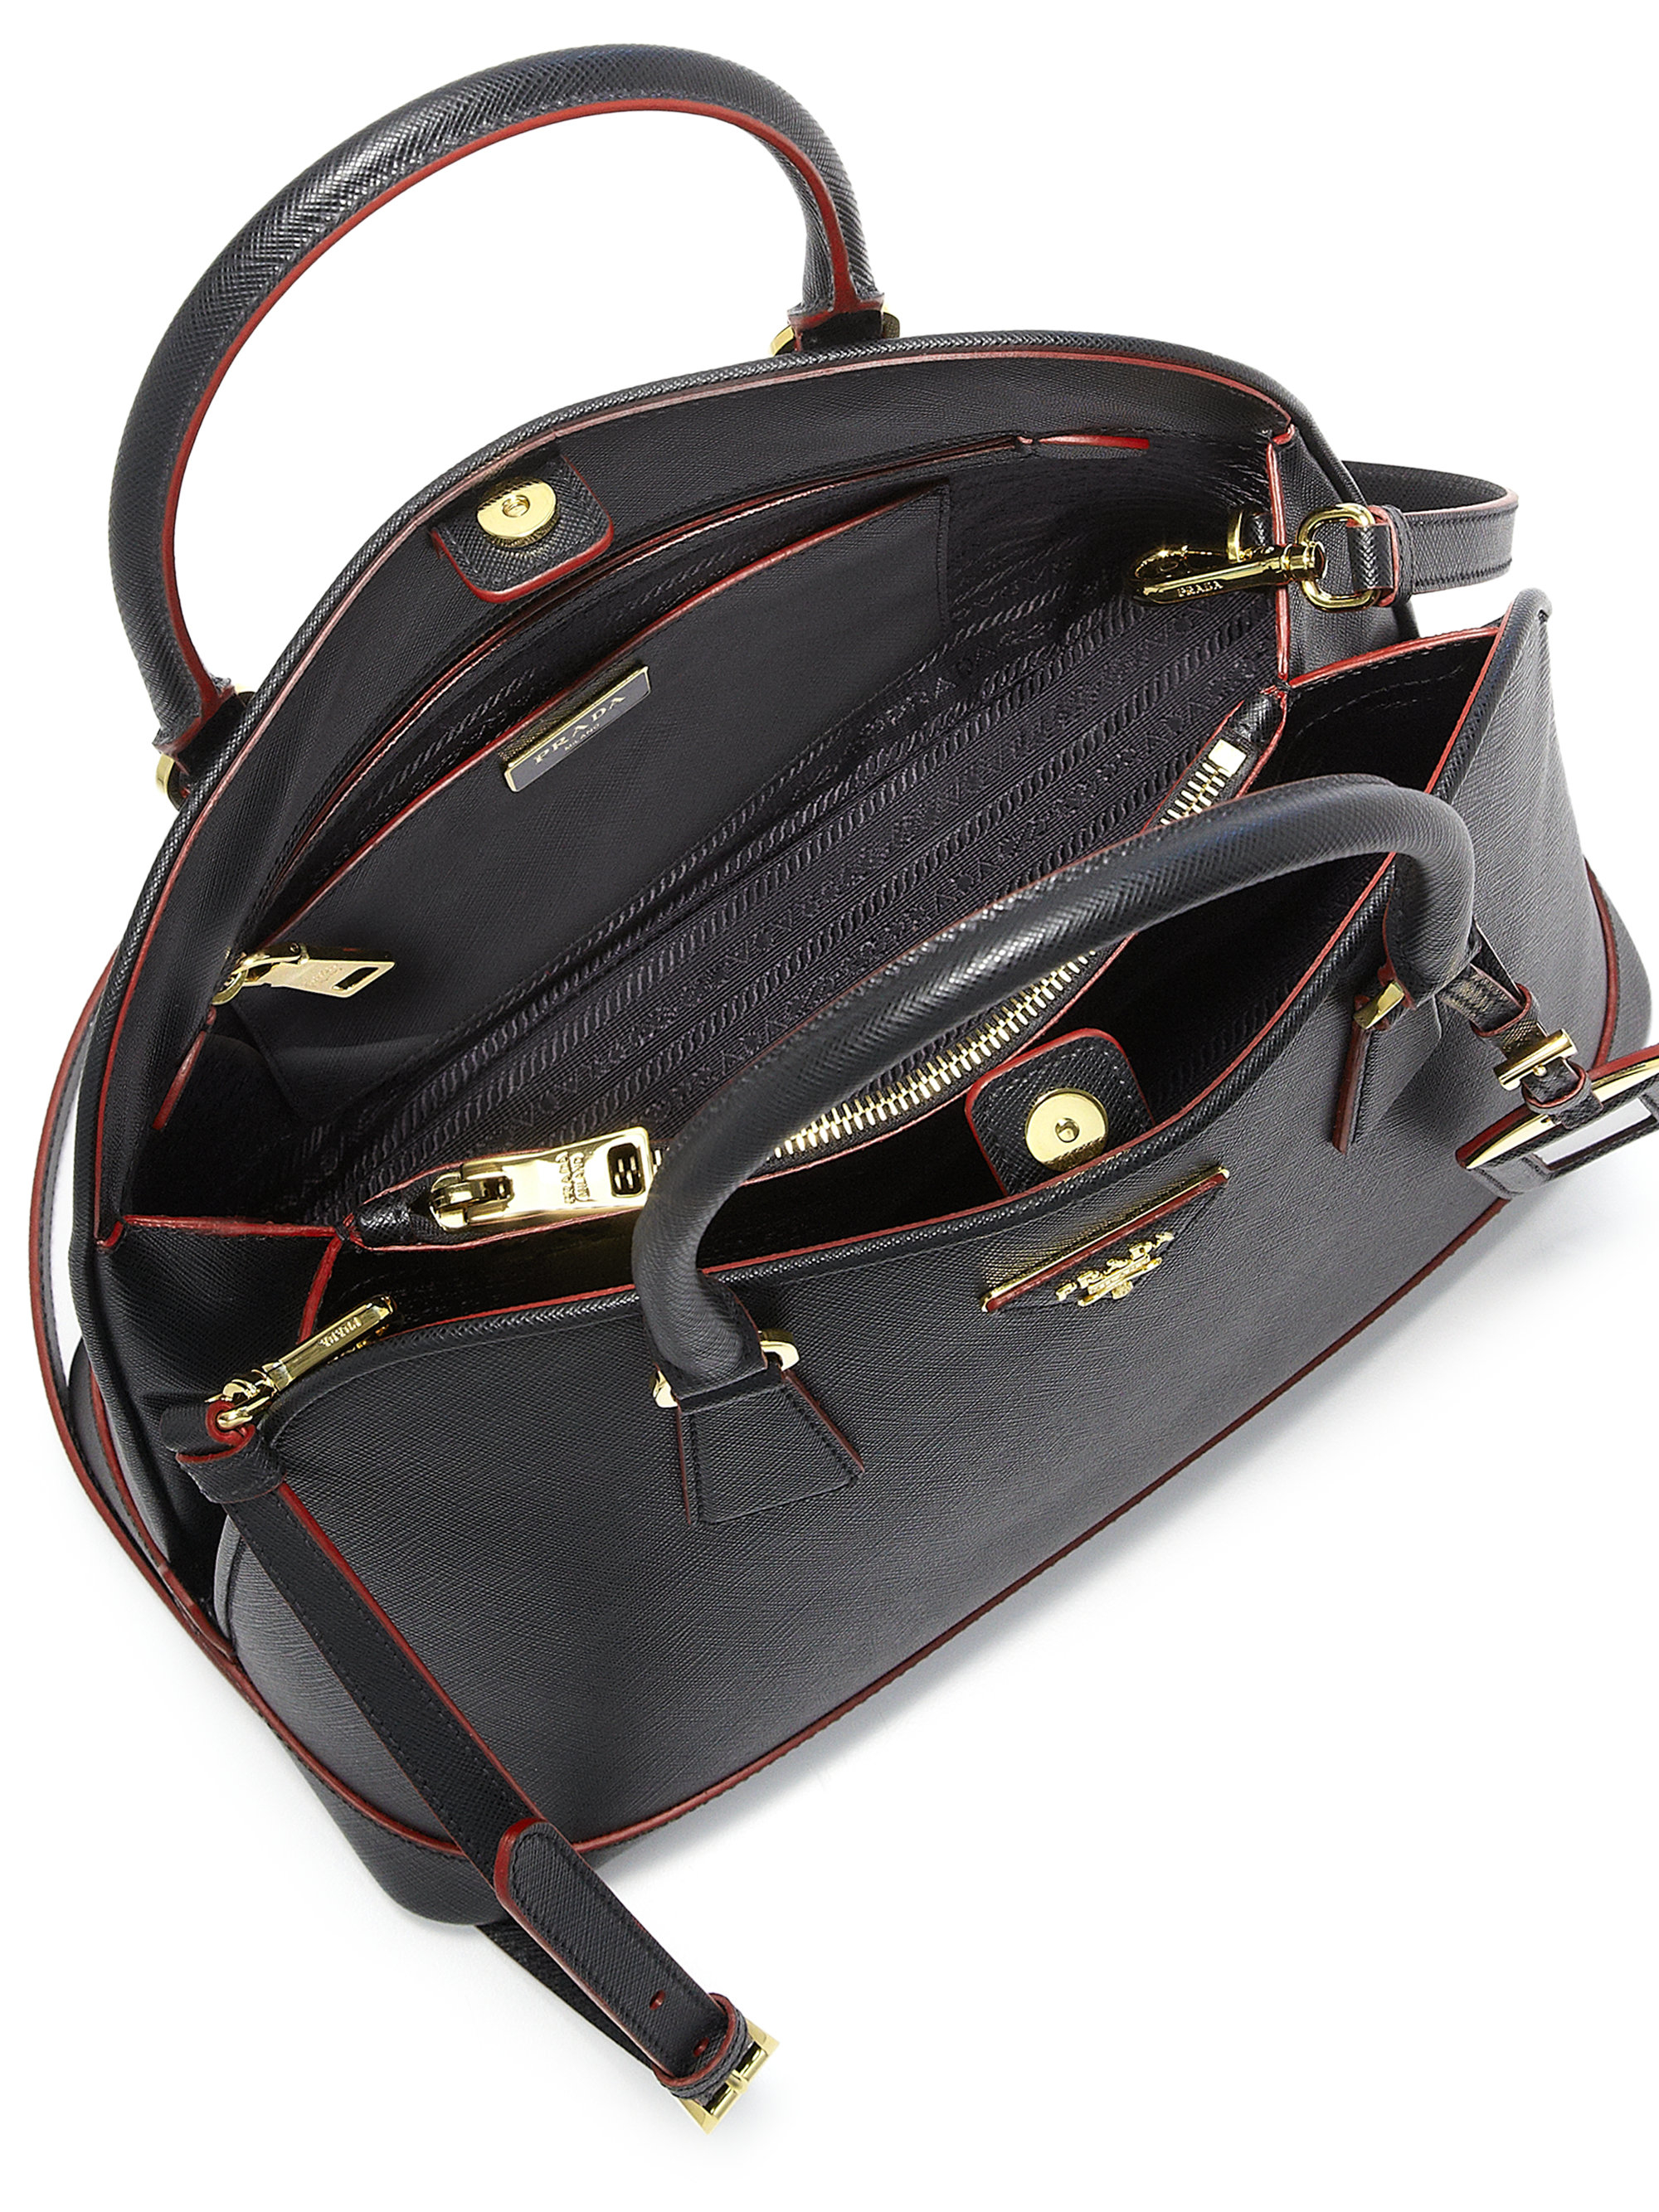 prada replica handbags wholesale - Prada Saffiano Lux Promenade Leather Satchel in Black | Lyst